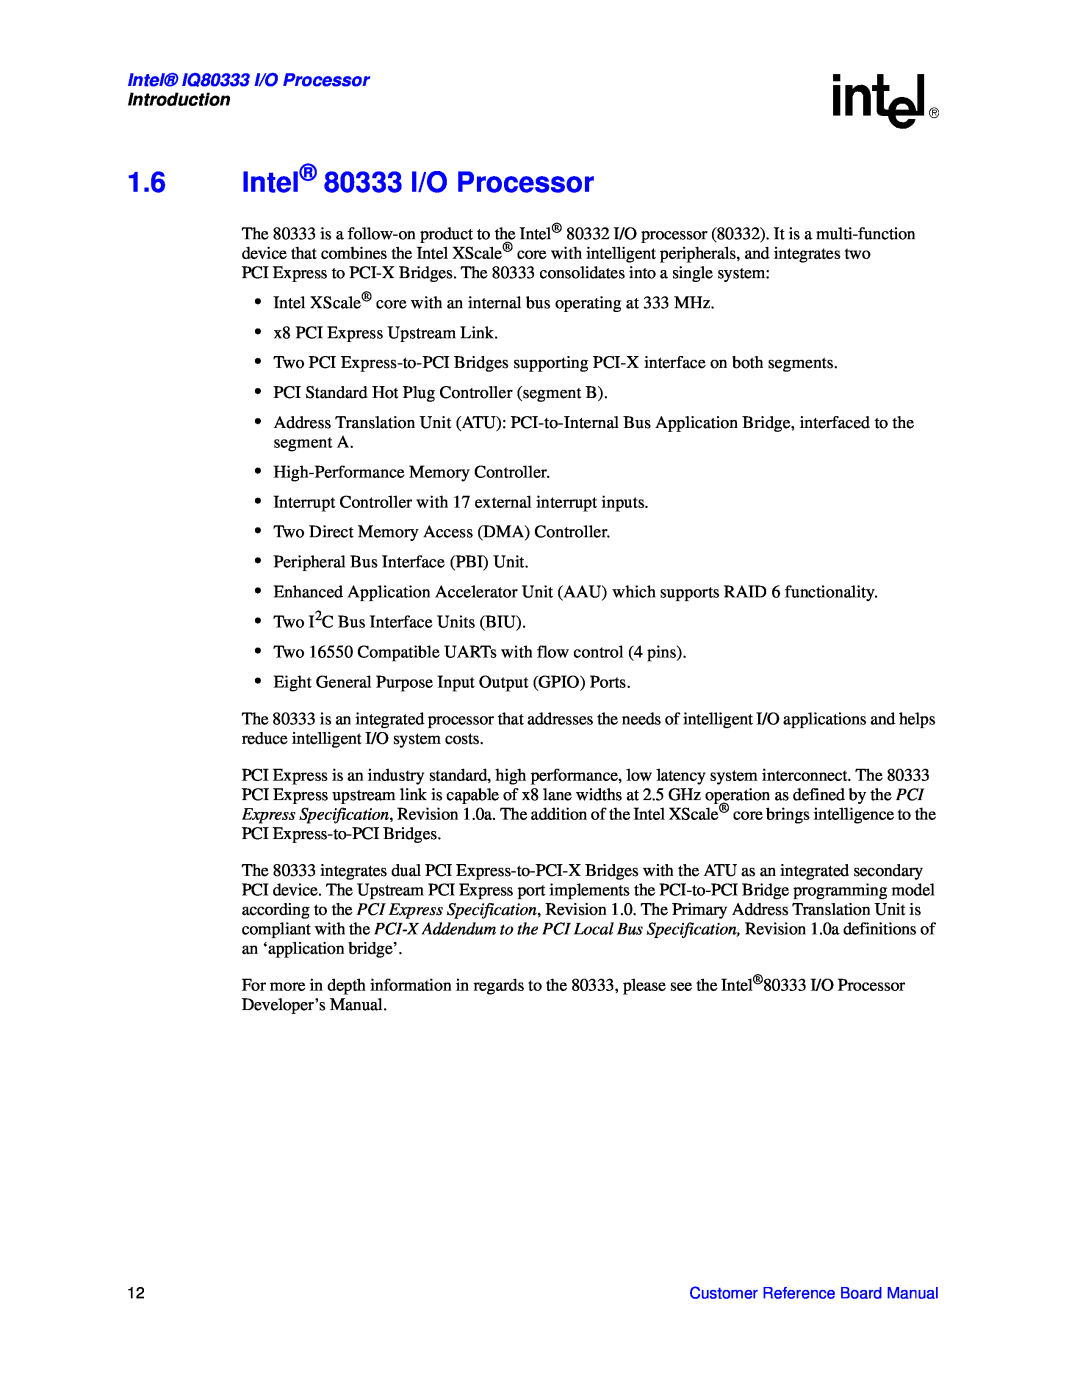 Intel manual 1.6Intel 80333 I/O Processor, Intel IQ80333 I/O Processor, Introduction 